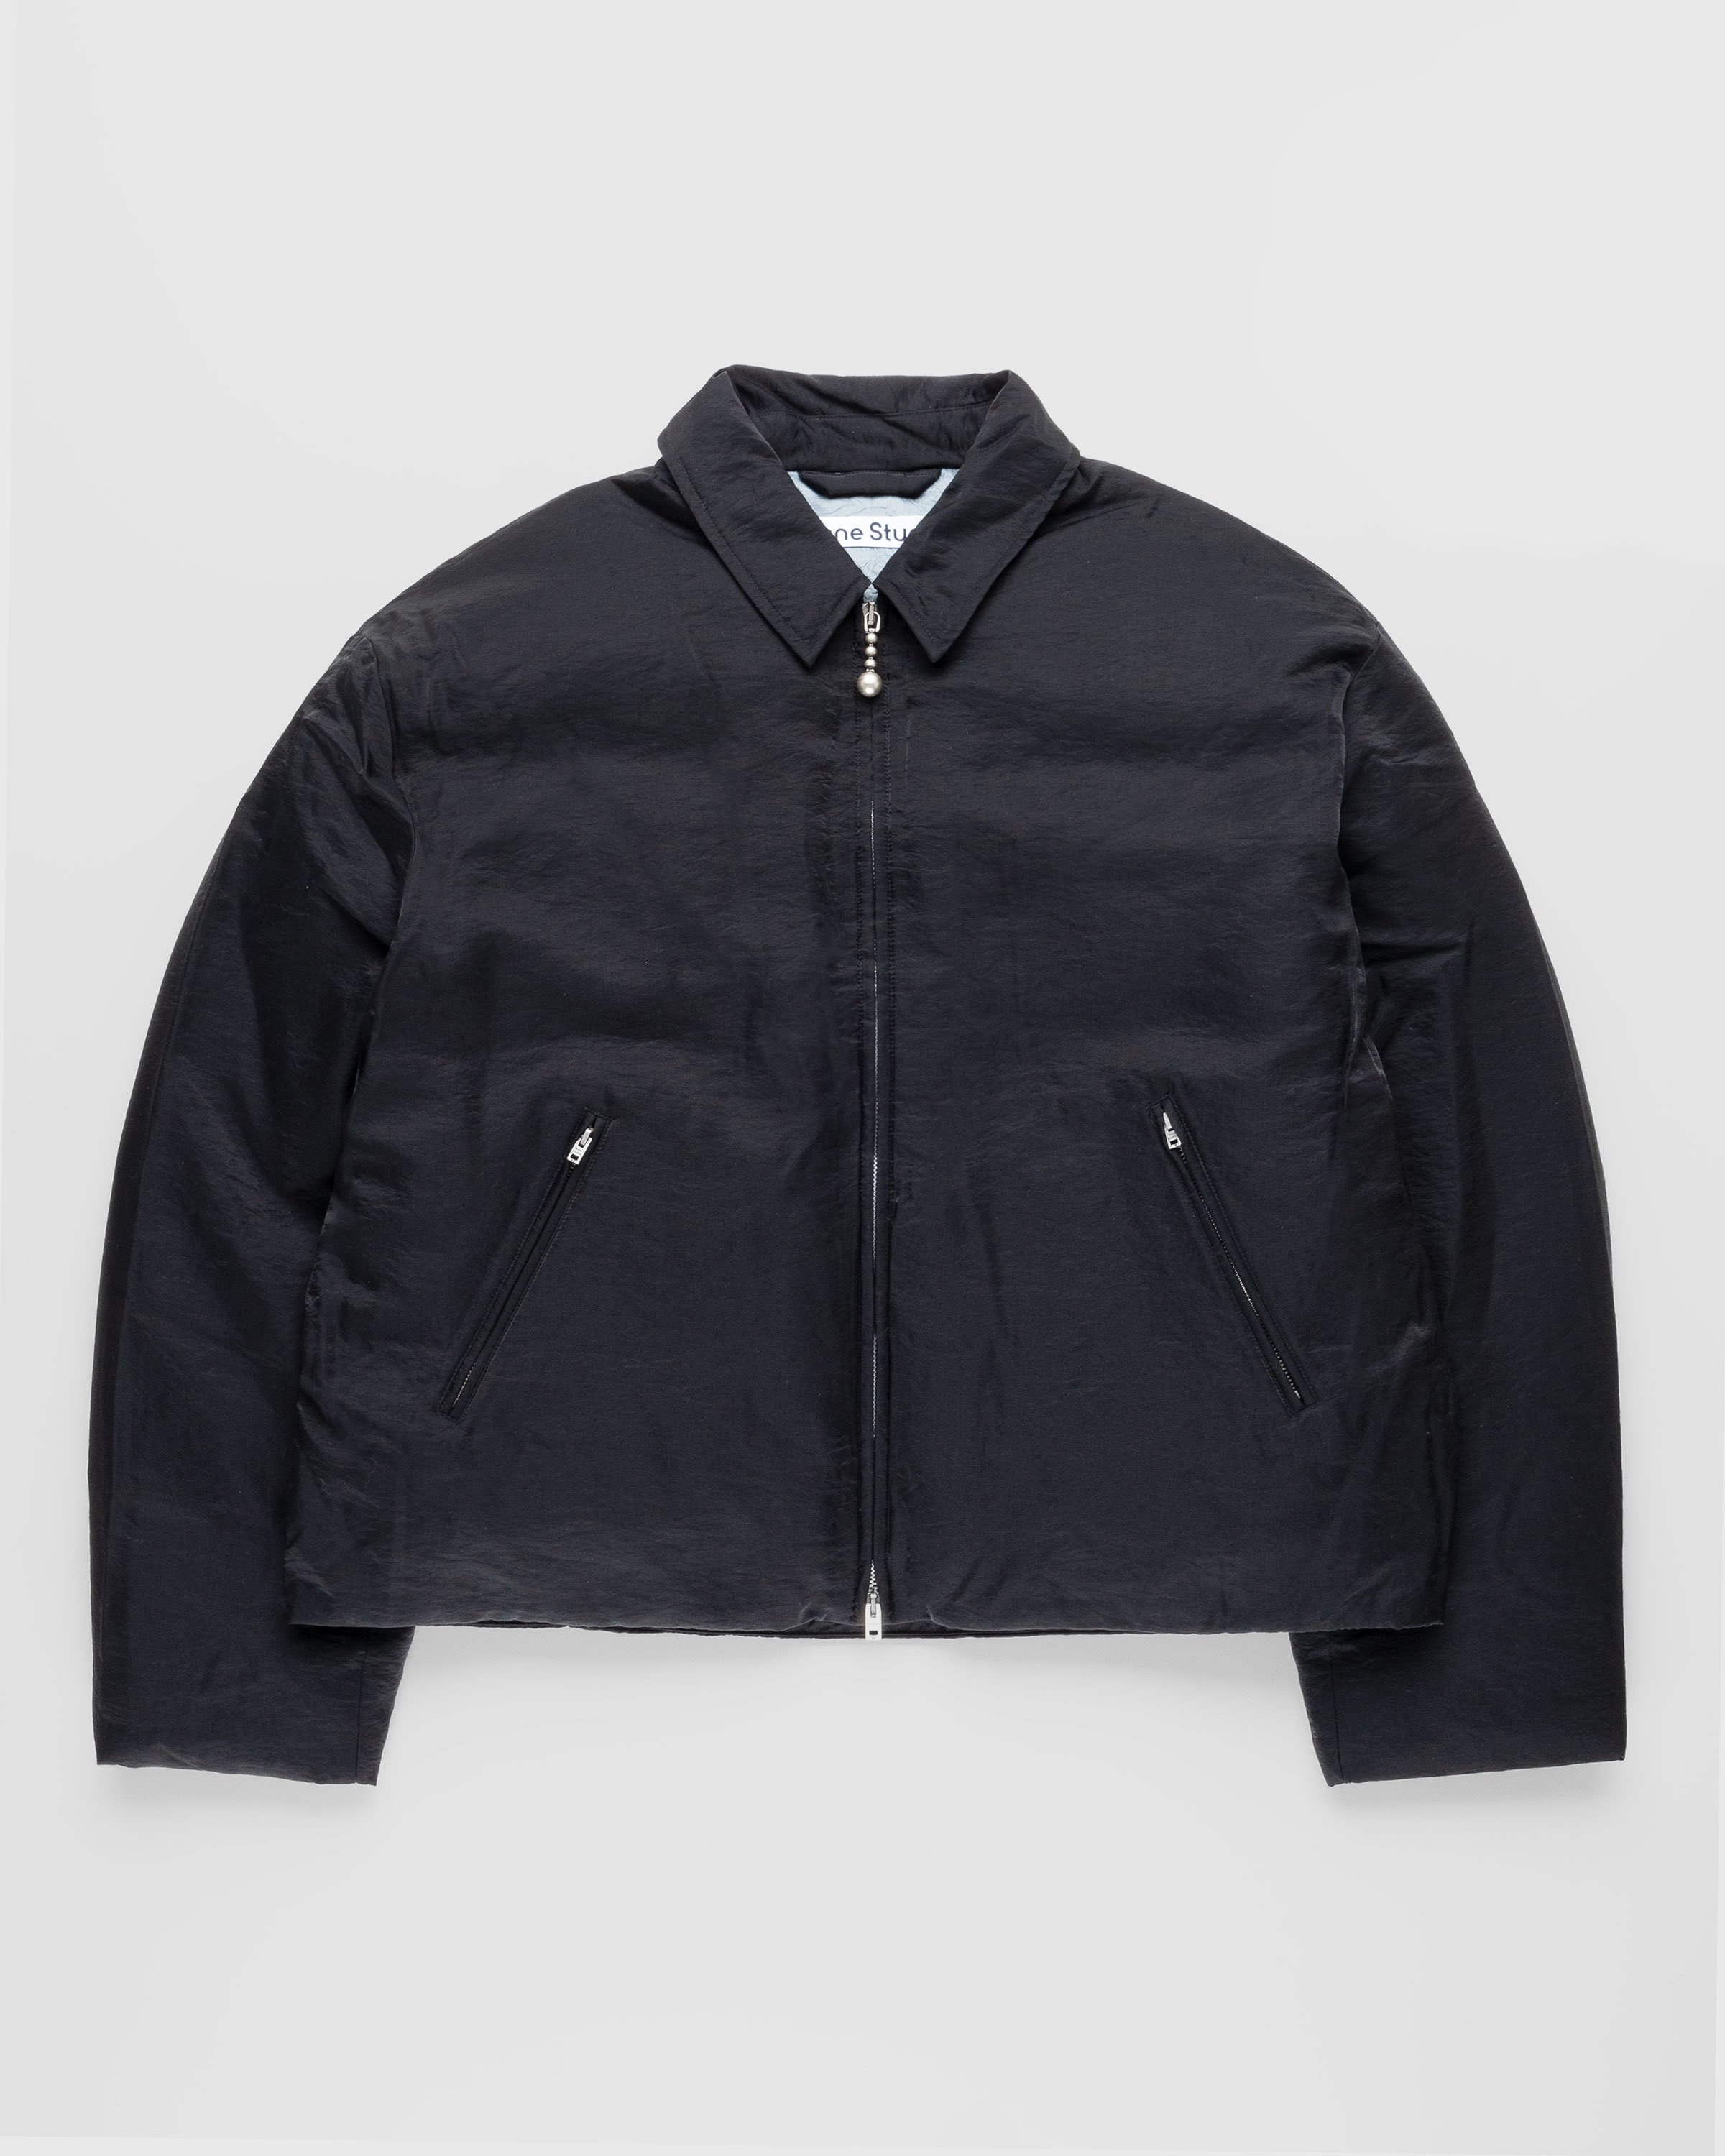 Acne Studios – Puffer Down Jacket Stone Black - Outerwear - Black - Image 1